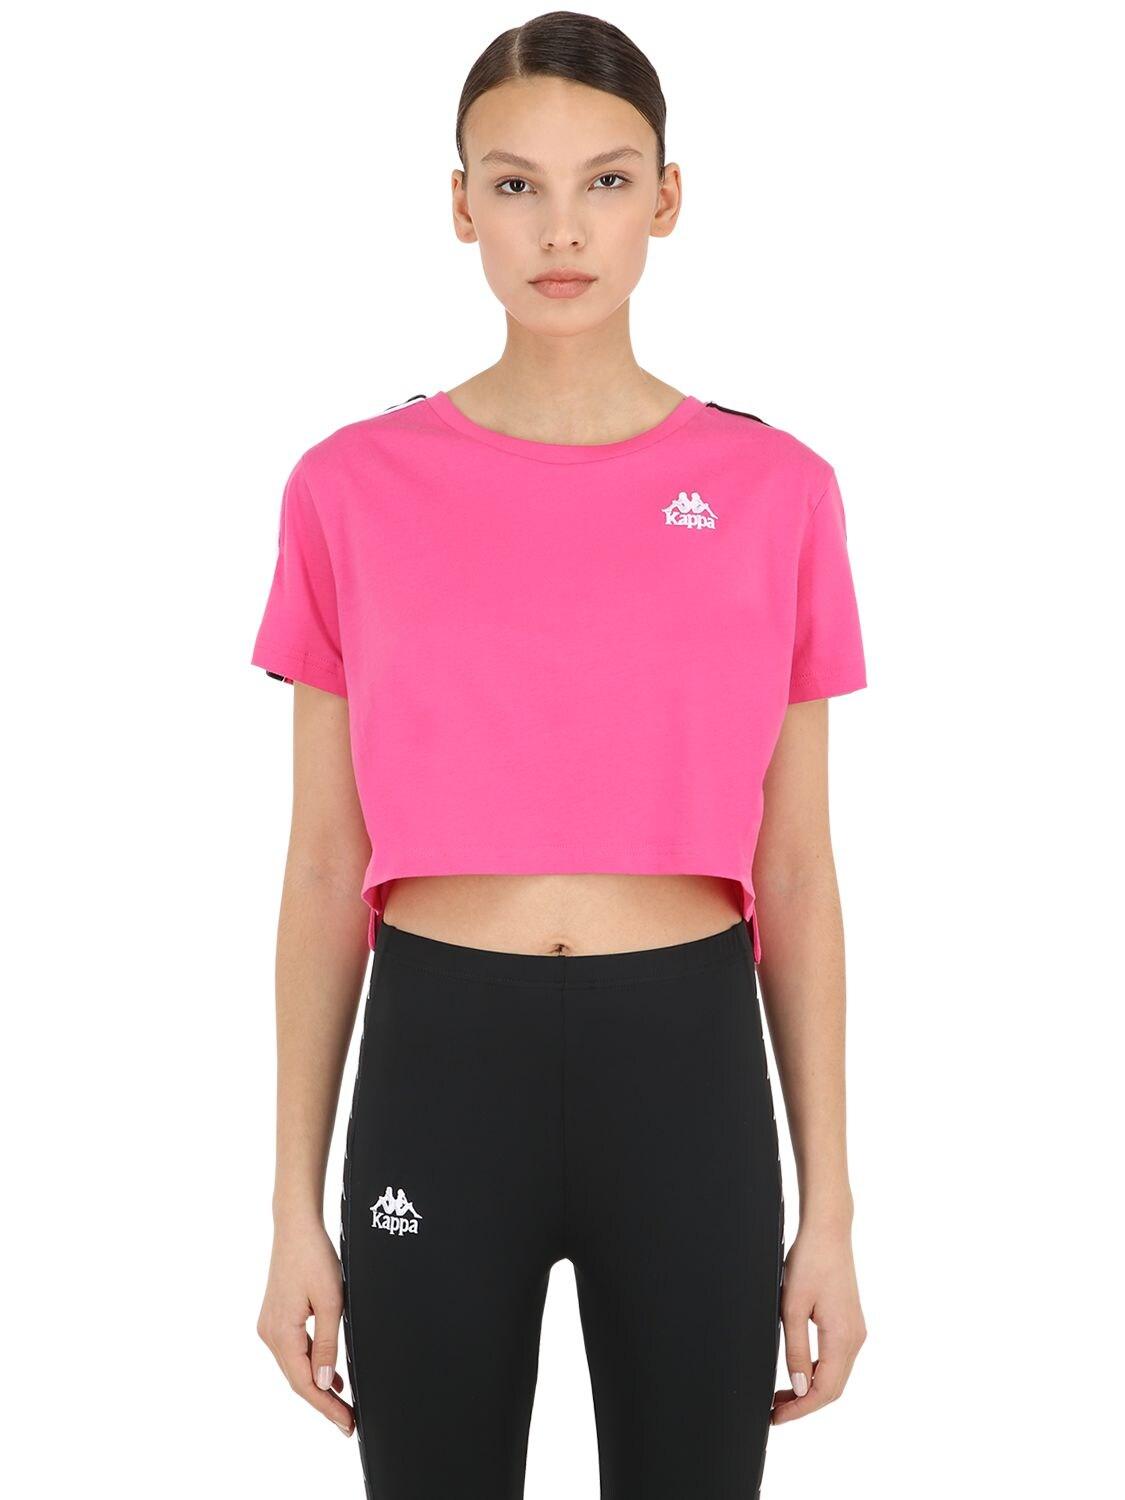 Kappa Banda Apua Cotton Jersey Crop T-shirt in Fuchsia (Pink) - Lyst